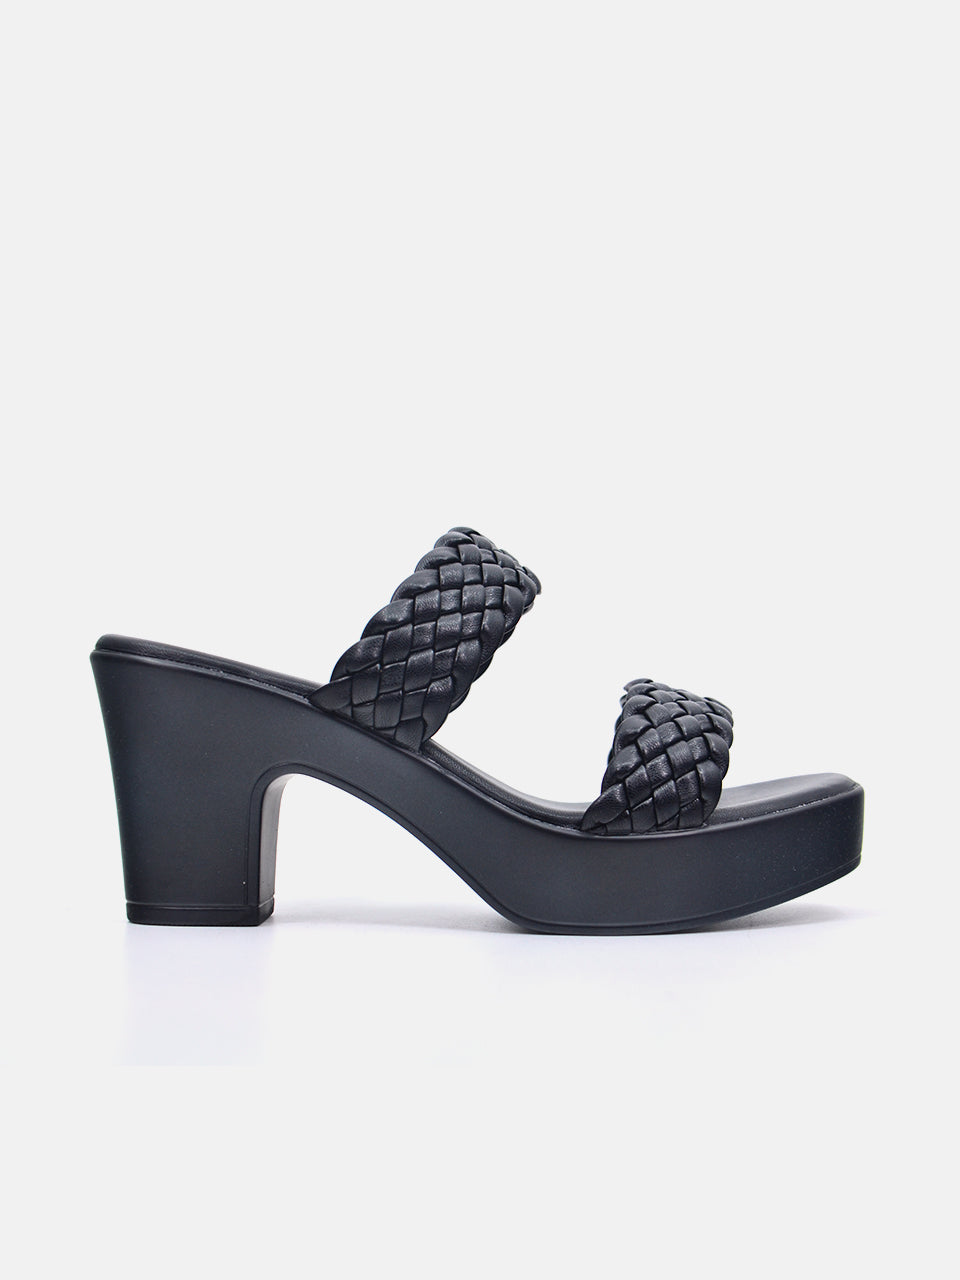 Michelle Morgan 114RJ85E Women's Braided Strap Sandals #color_Black